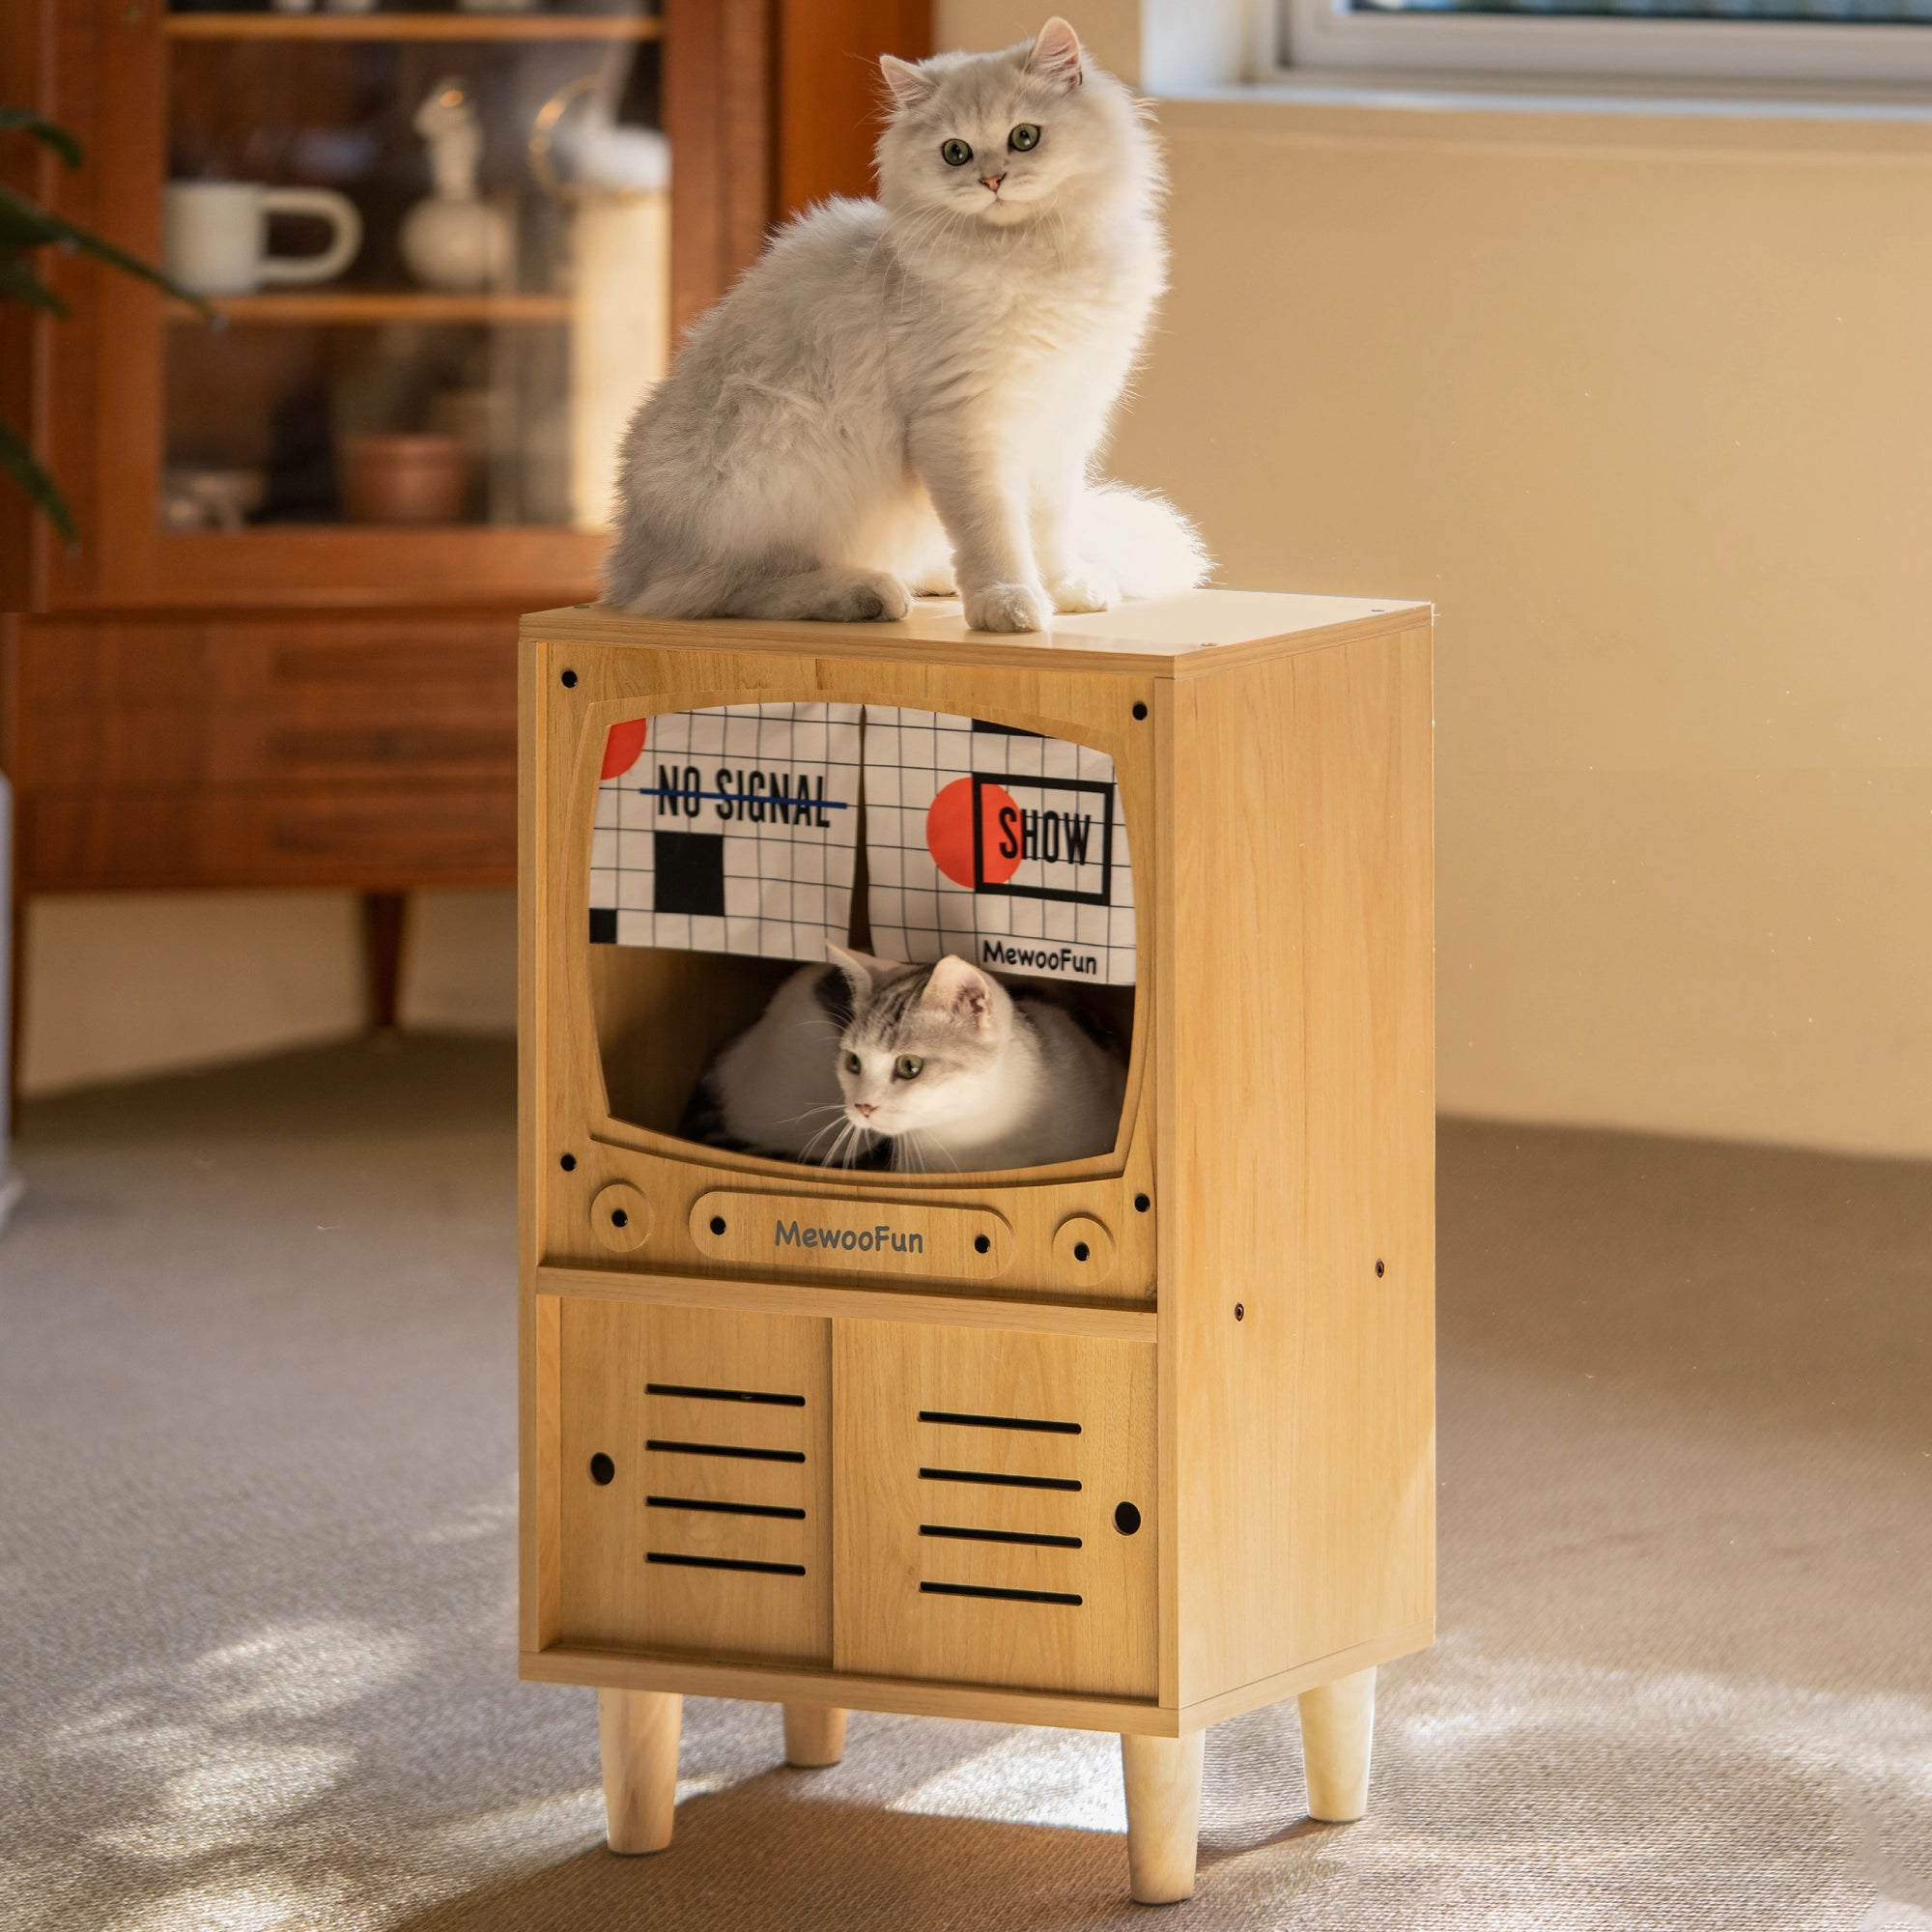 MewooFun TV-shaped Cat House